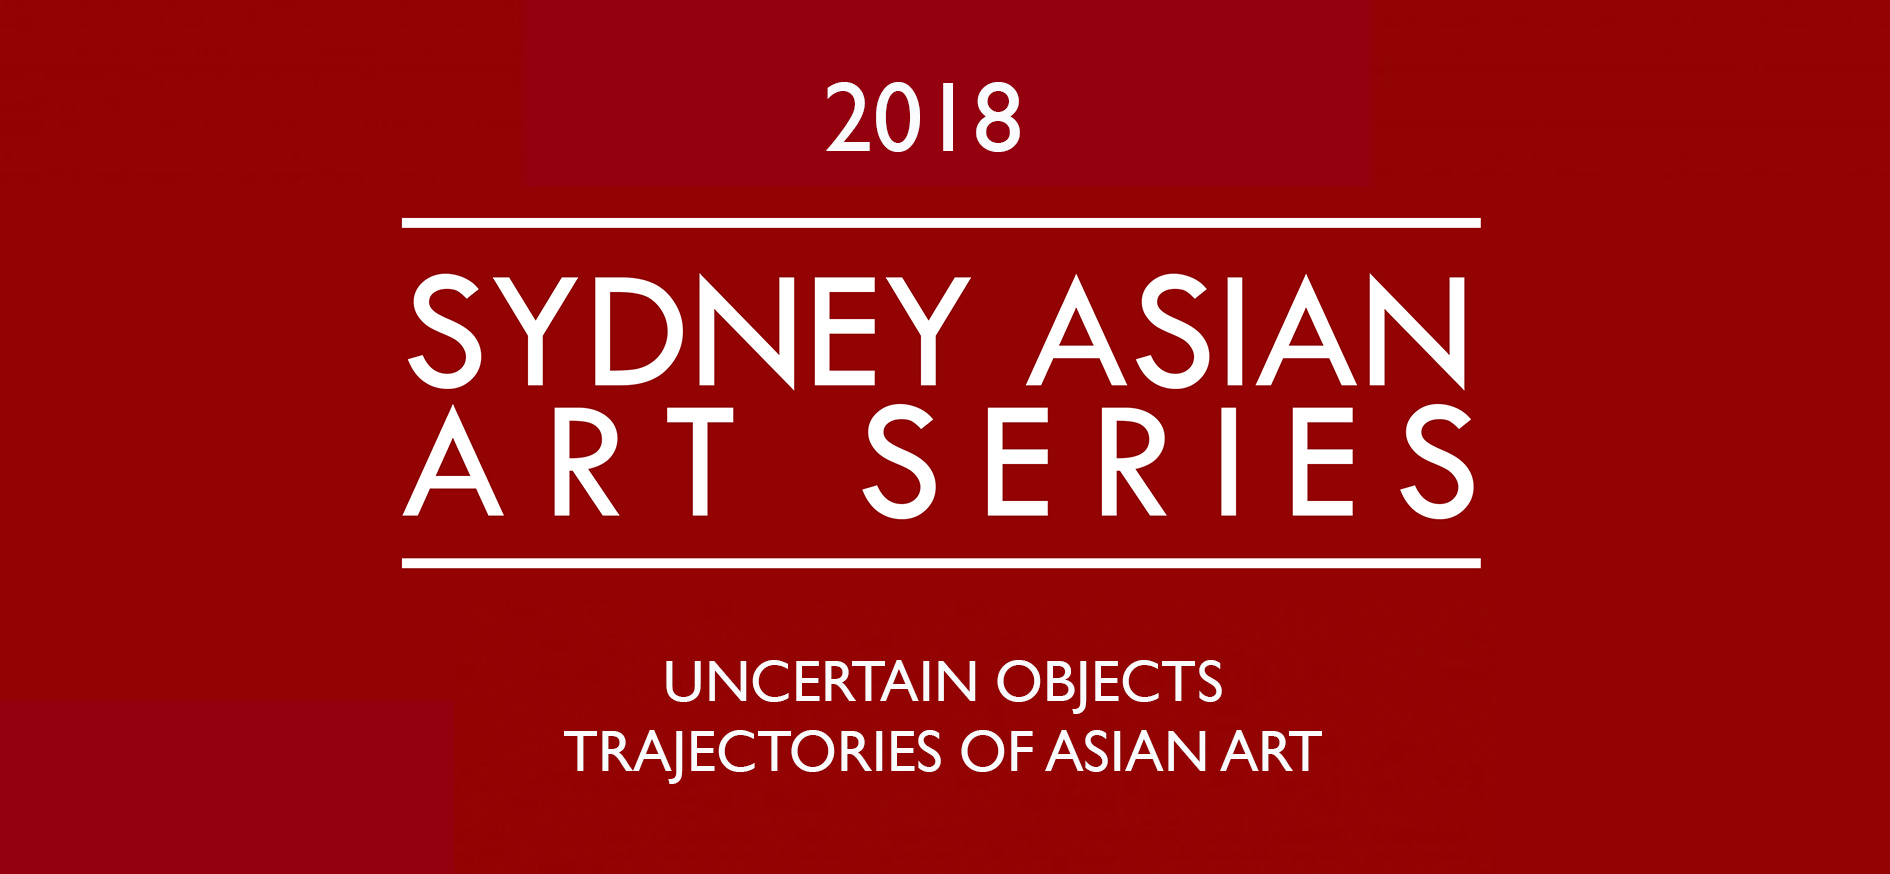 2018 Sydney Asian Art Series: Uncertain Objects, Trajectories of Asian Art